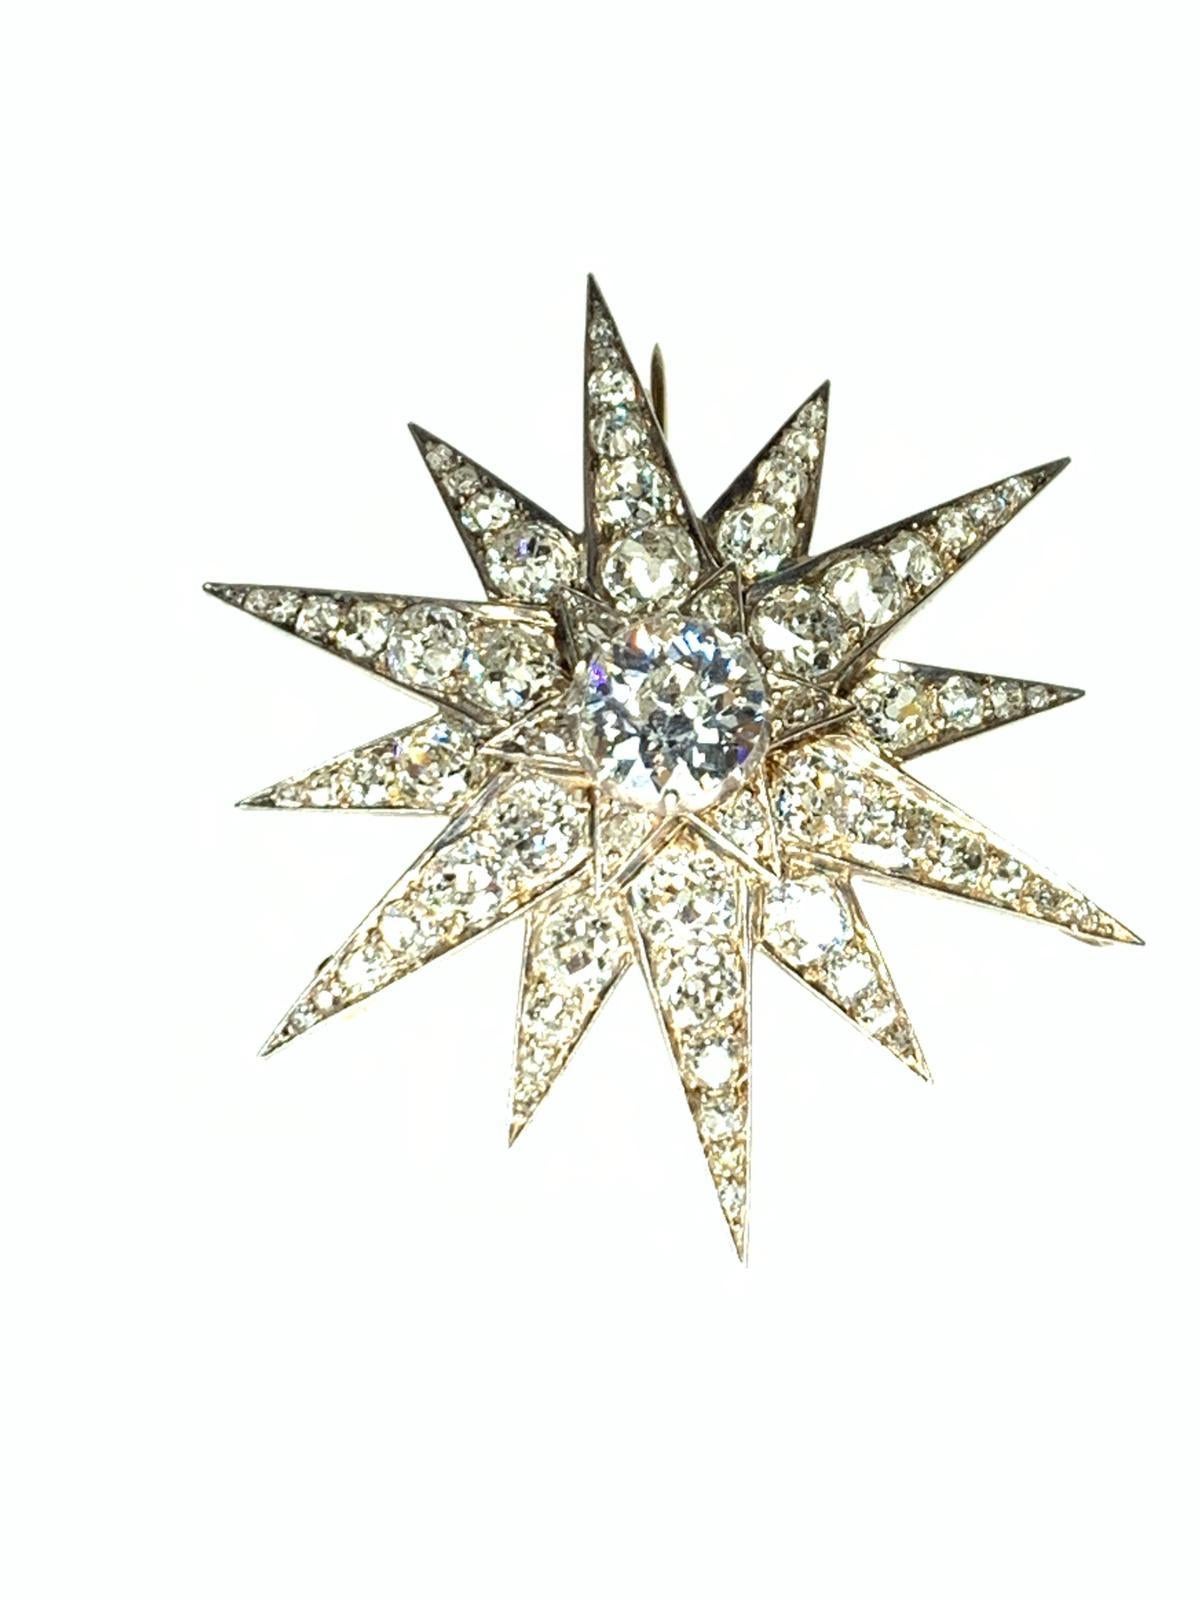 A Victorian gold, silver & diamond Star brooch/pendant. Width 5,3cm. Weight 15,95gr. 
67 Diamonds. Middle Diamond ca 2,8ct Rest of Diamonds 8,5ct KM/VS2 silver & gold 18k